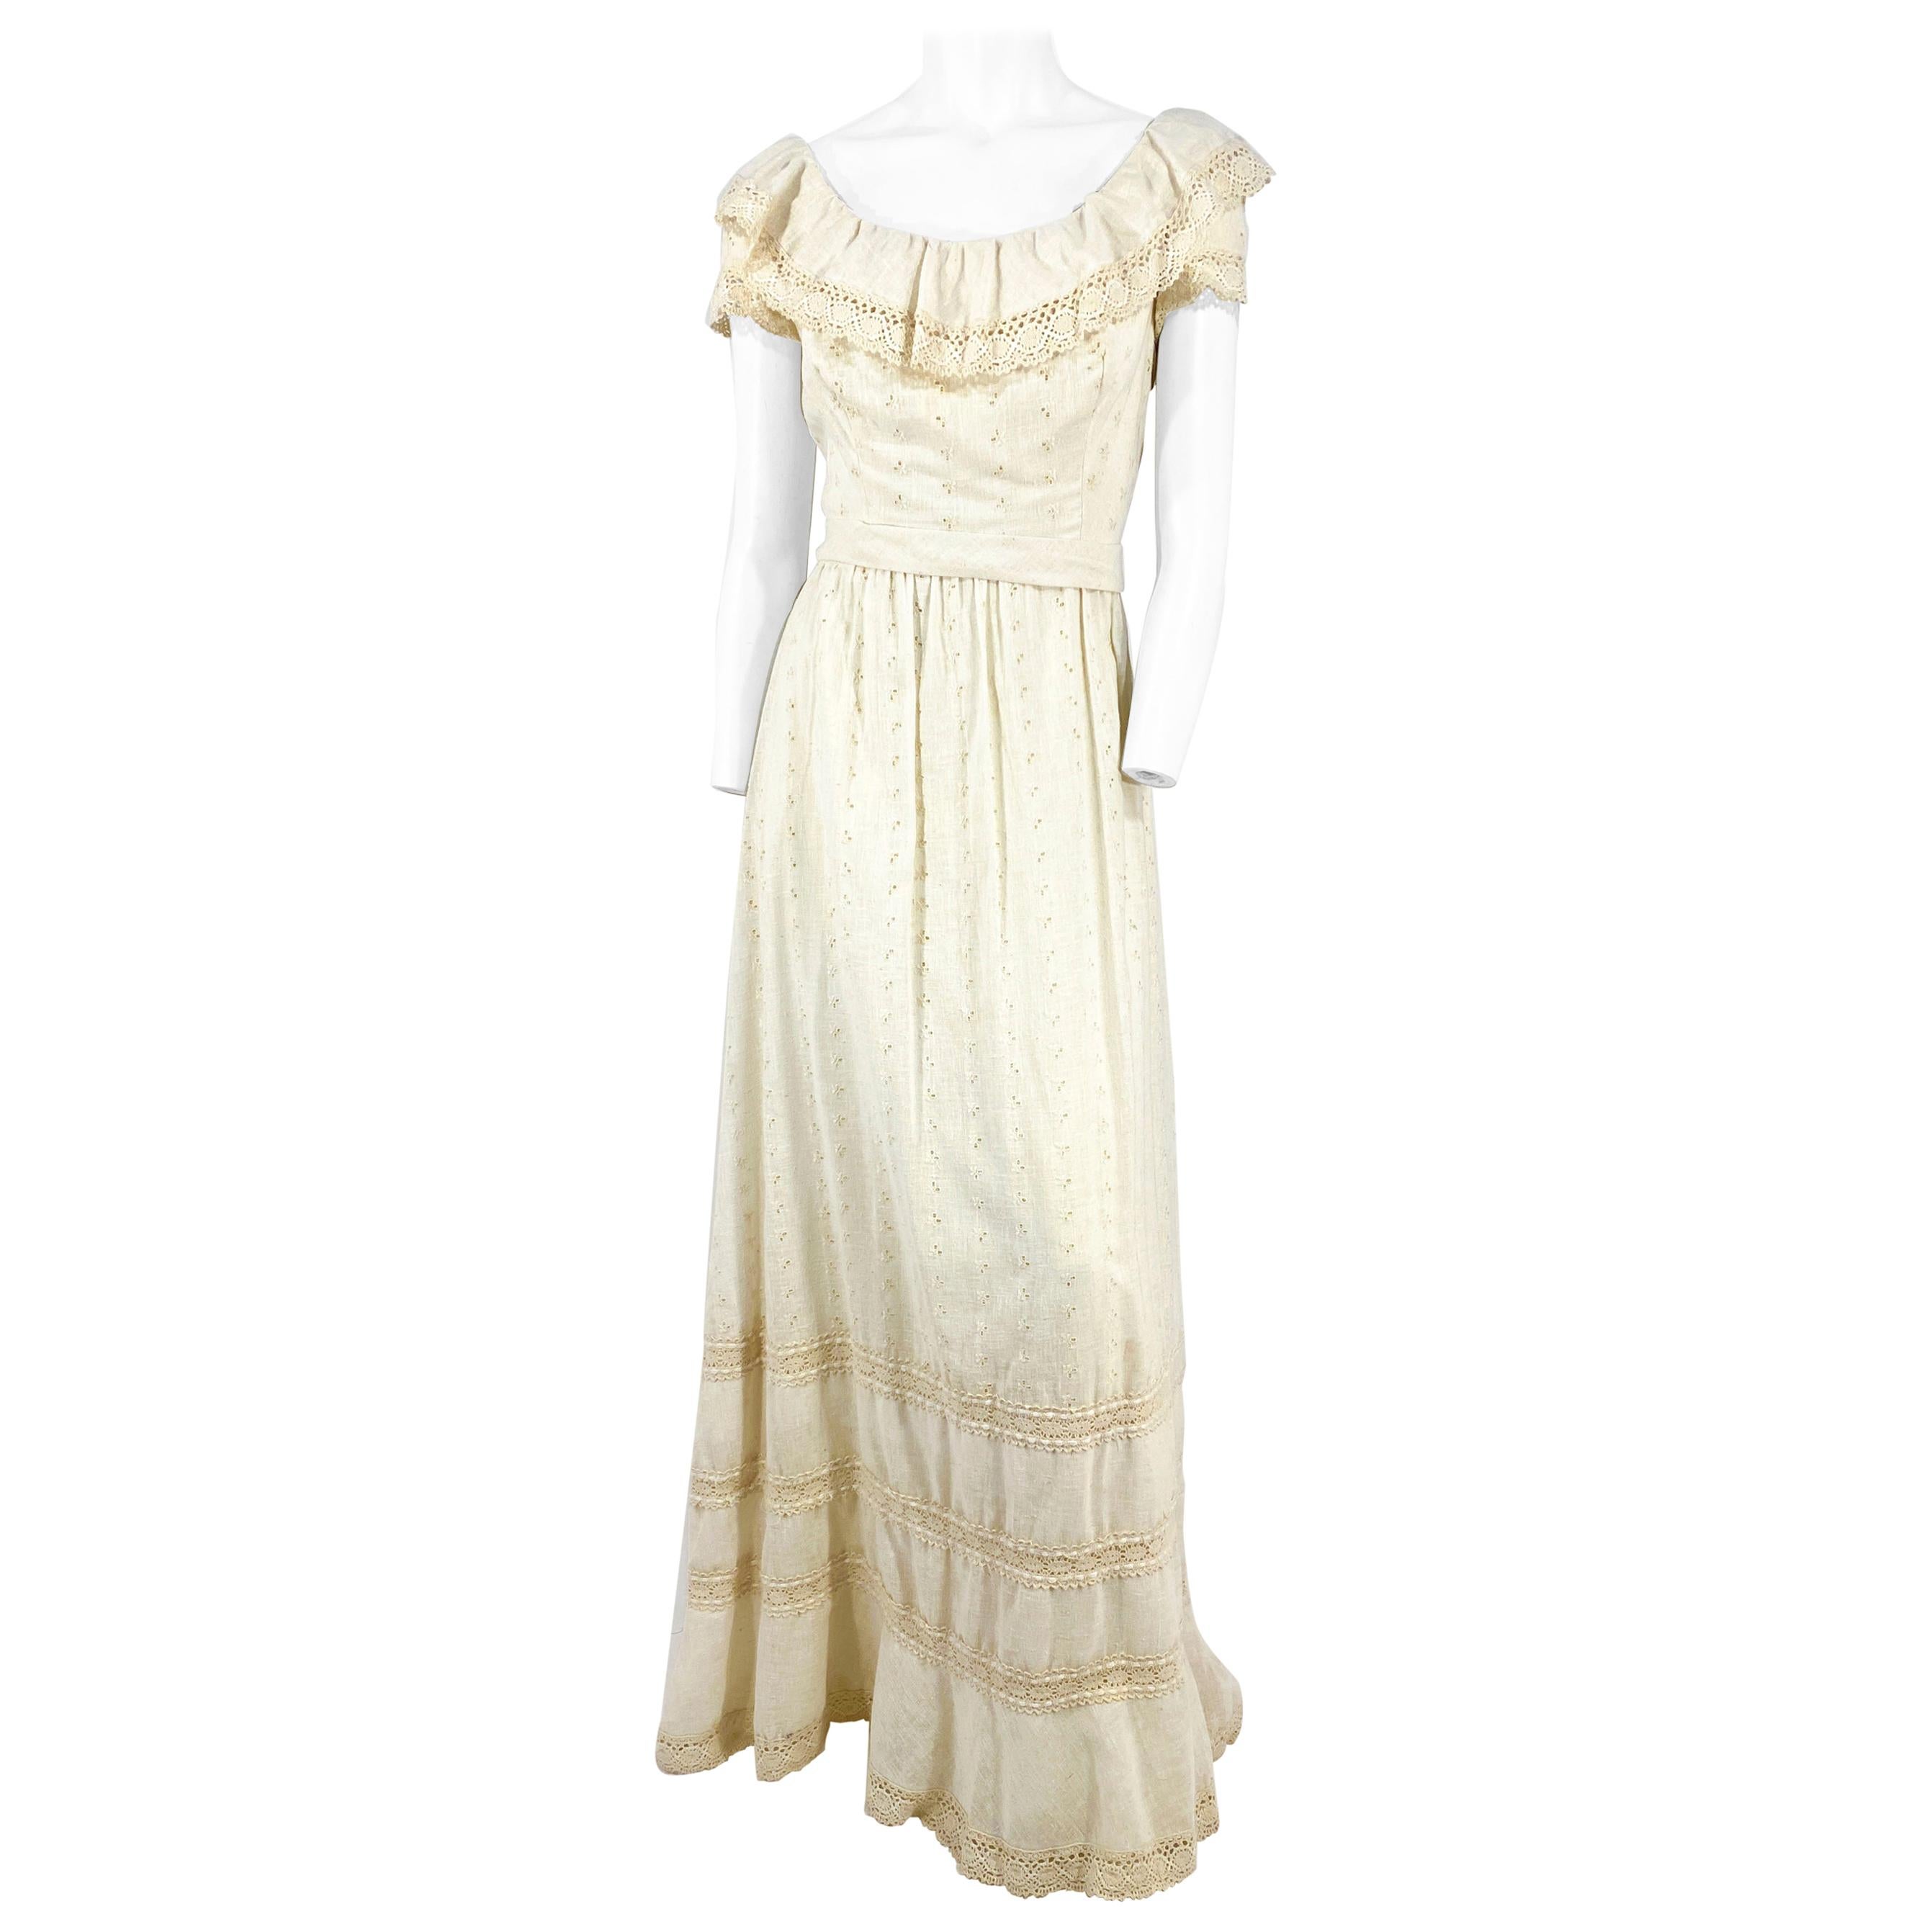 1960s Cotton Full-Length Dress with Crochet Trim